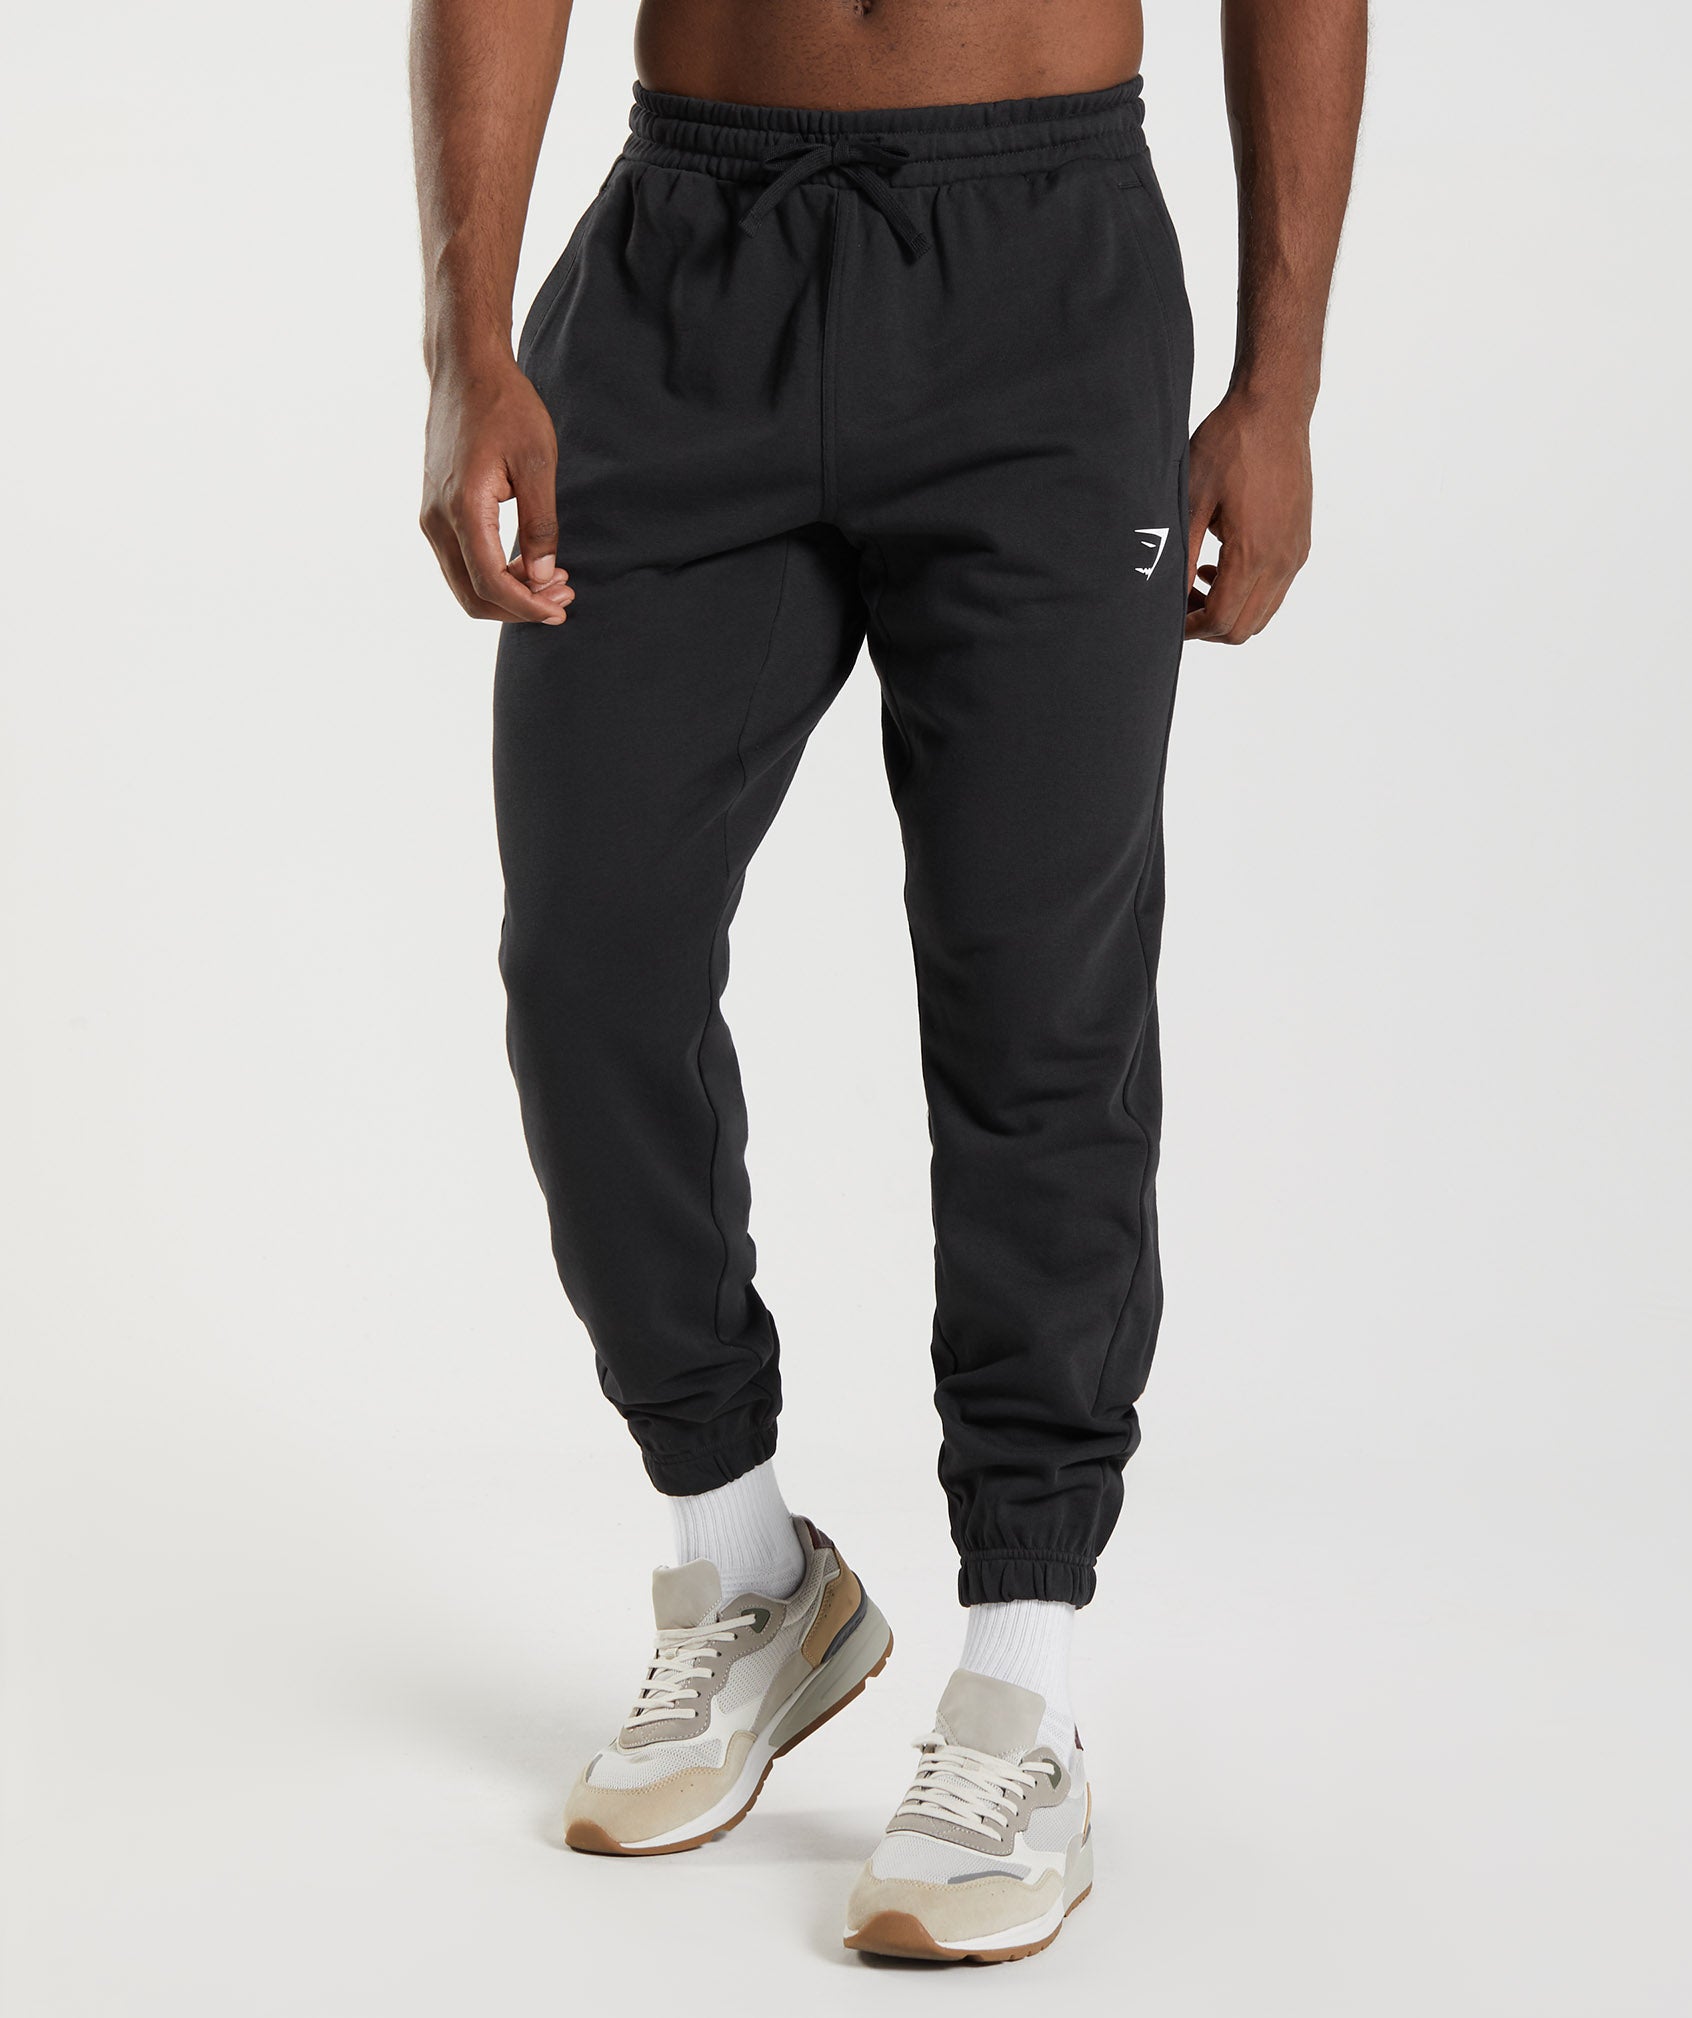 Gymshark Luxe Joggers Sweatpants Blue Medium Pockets Elastic Waist Zip  Ankle